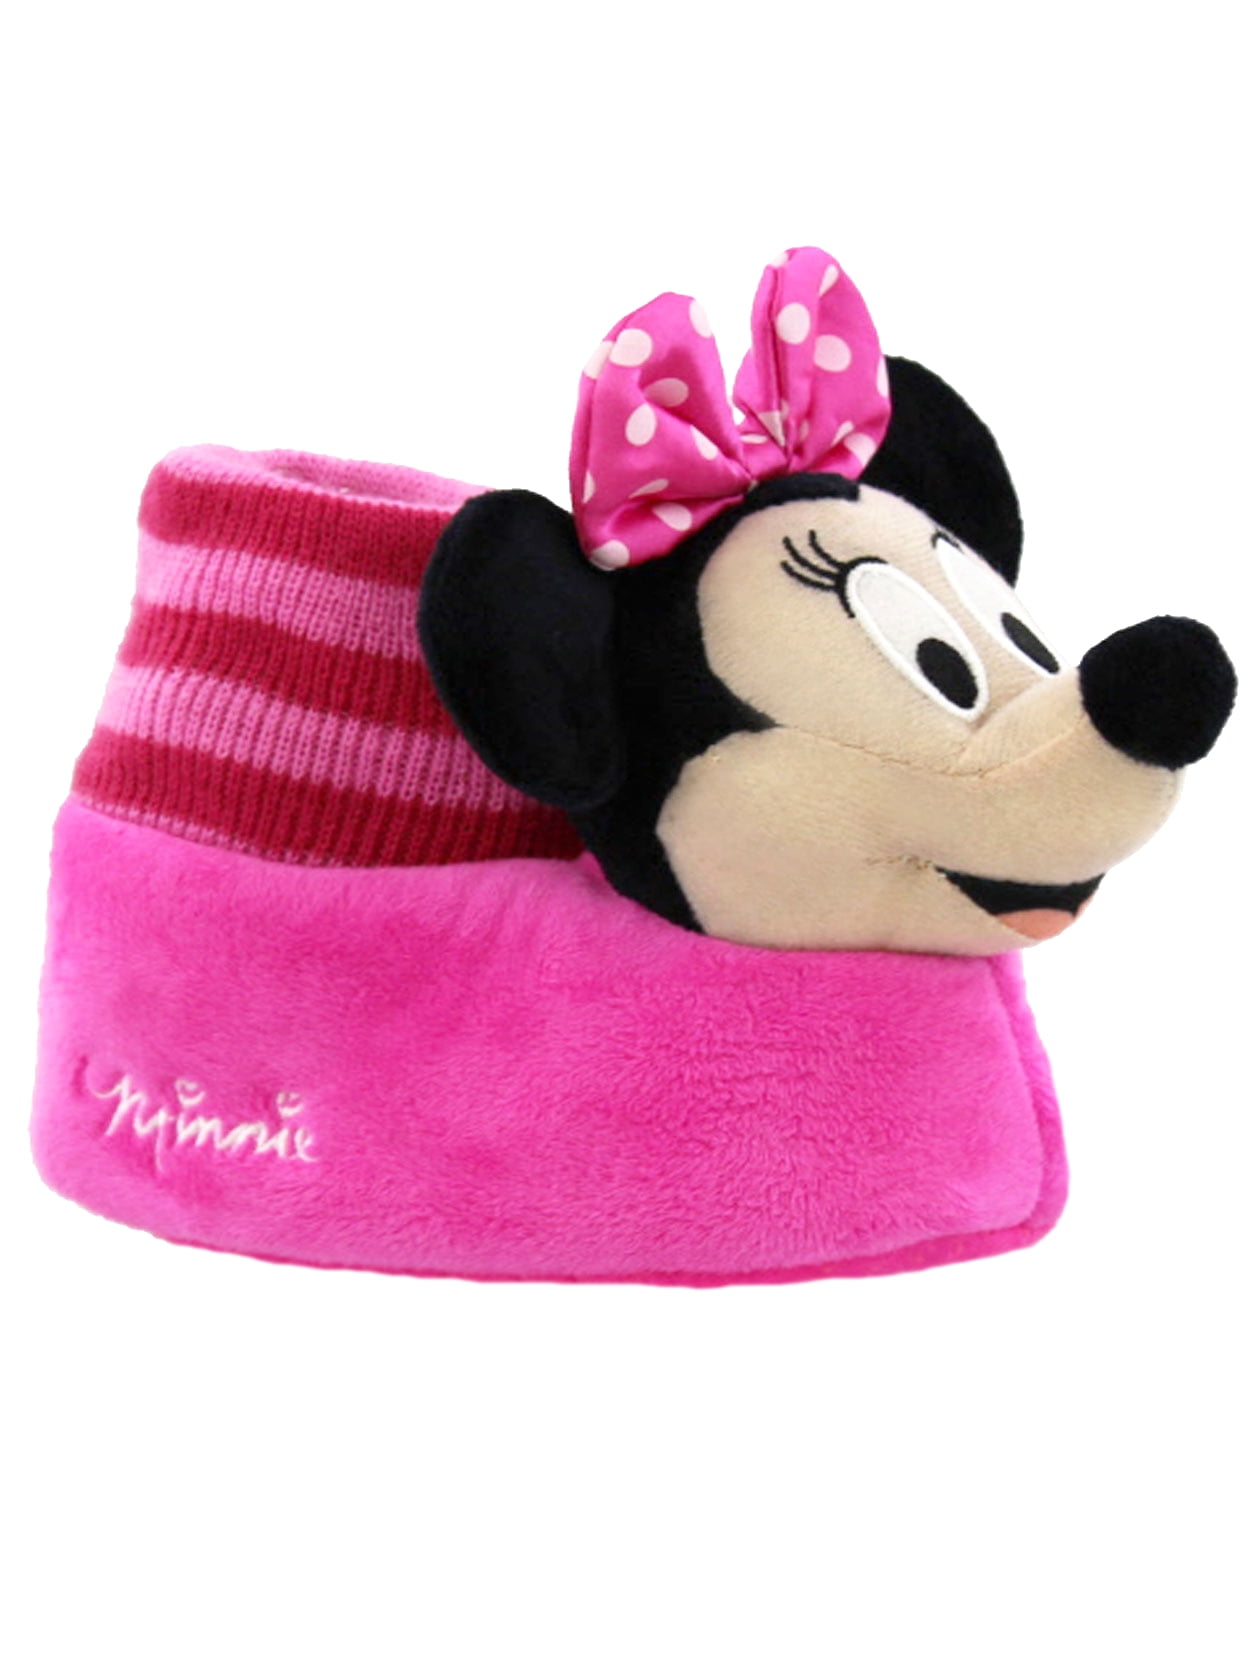 Disney Parks Minnie Mouse Plush Adult Slippers Brand New Size Medium 